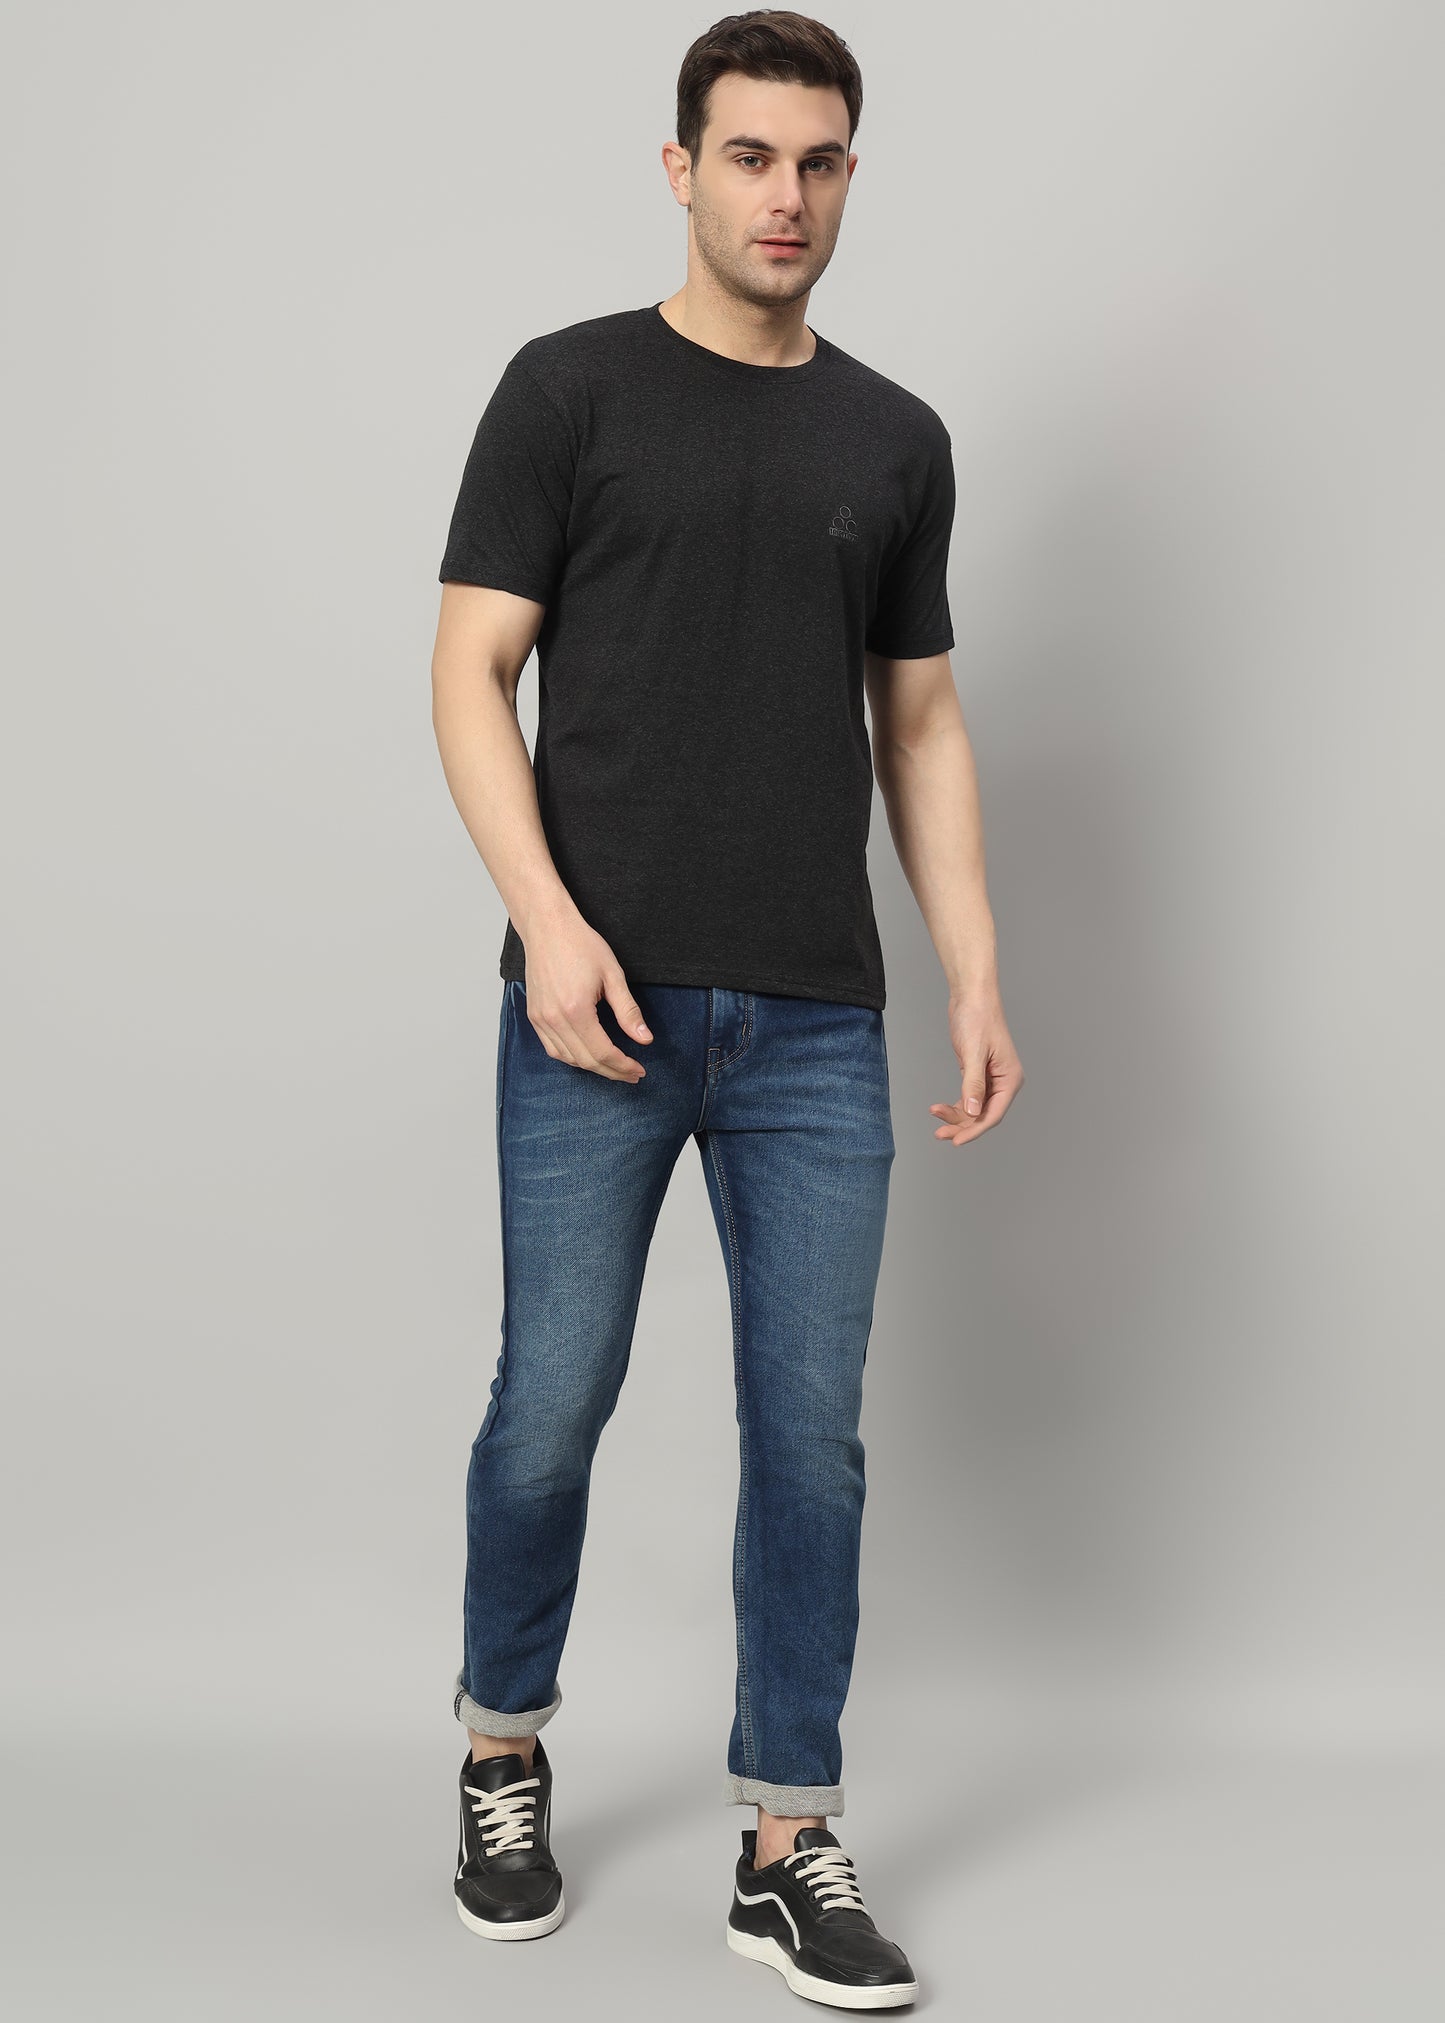 Men's Black Round Neck Solid T-Shirt Triple dot